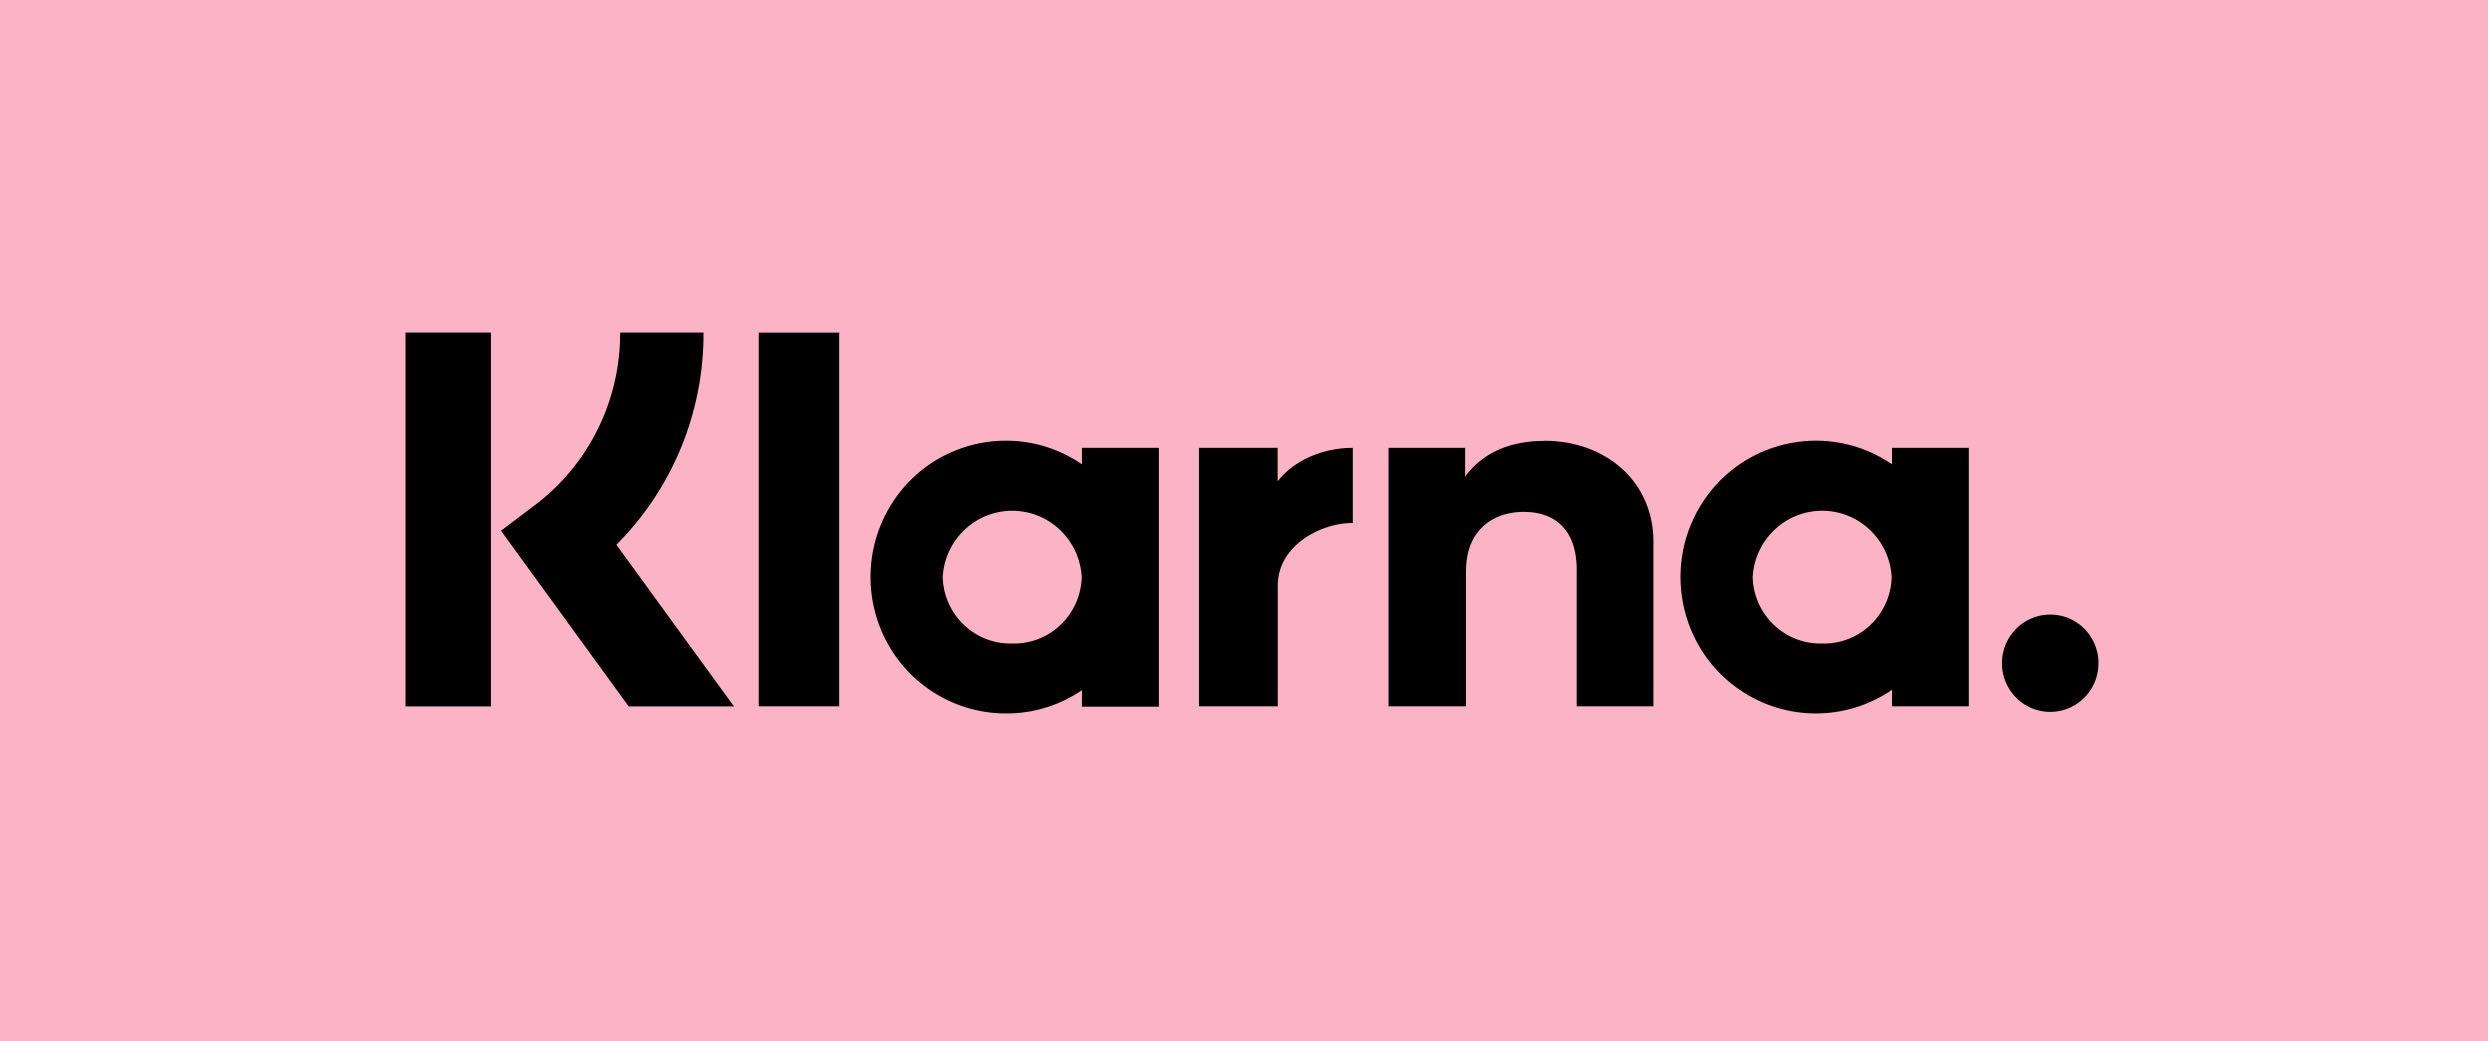 Klarna Launches $7.99 ‘Klarna Plus’ Subscription Plan Ahead Of IPO